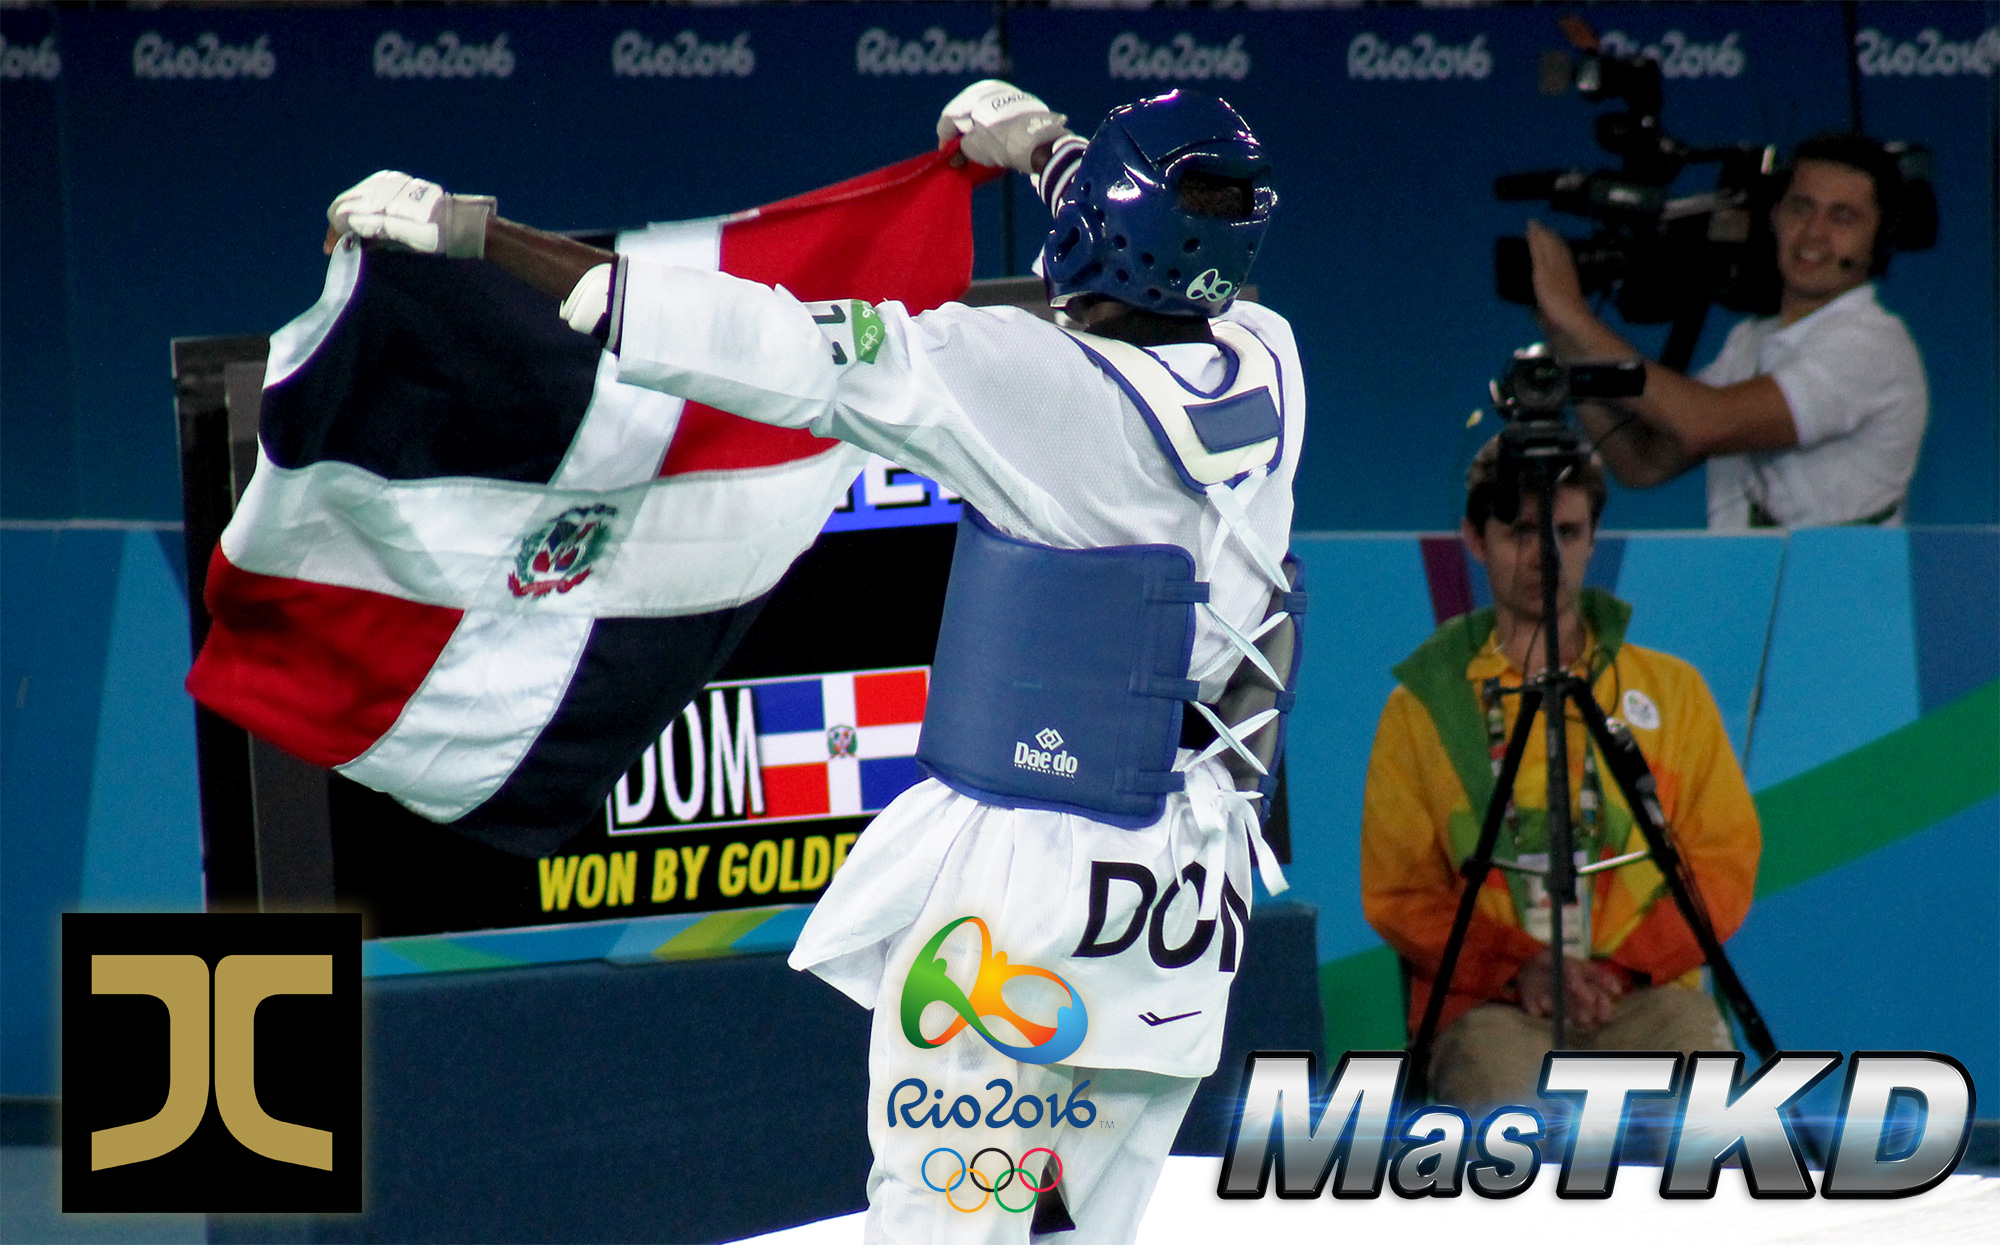 20160817_Taekwondo_JC_masTKD_Rio2016_01